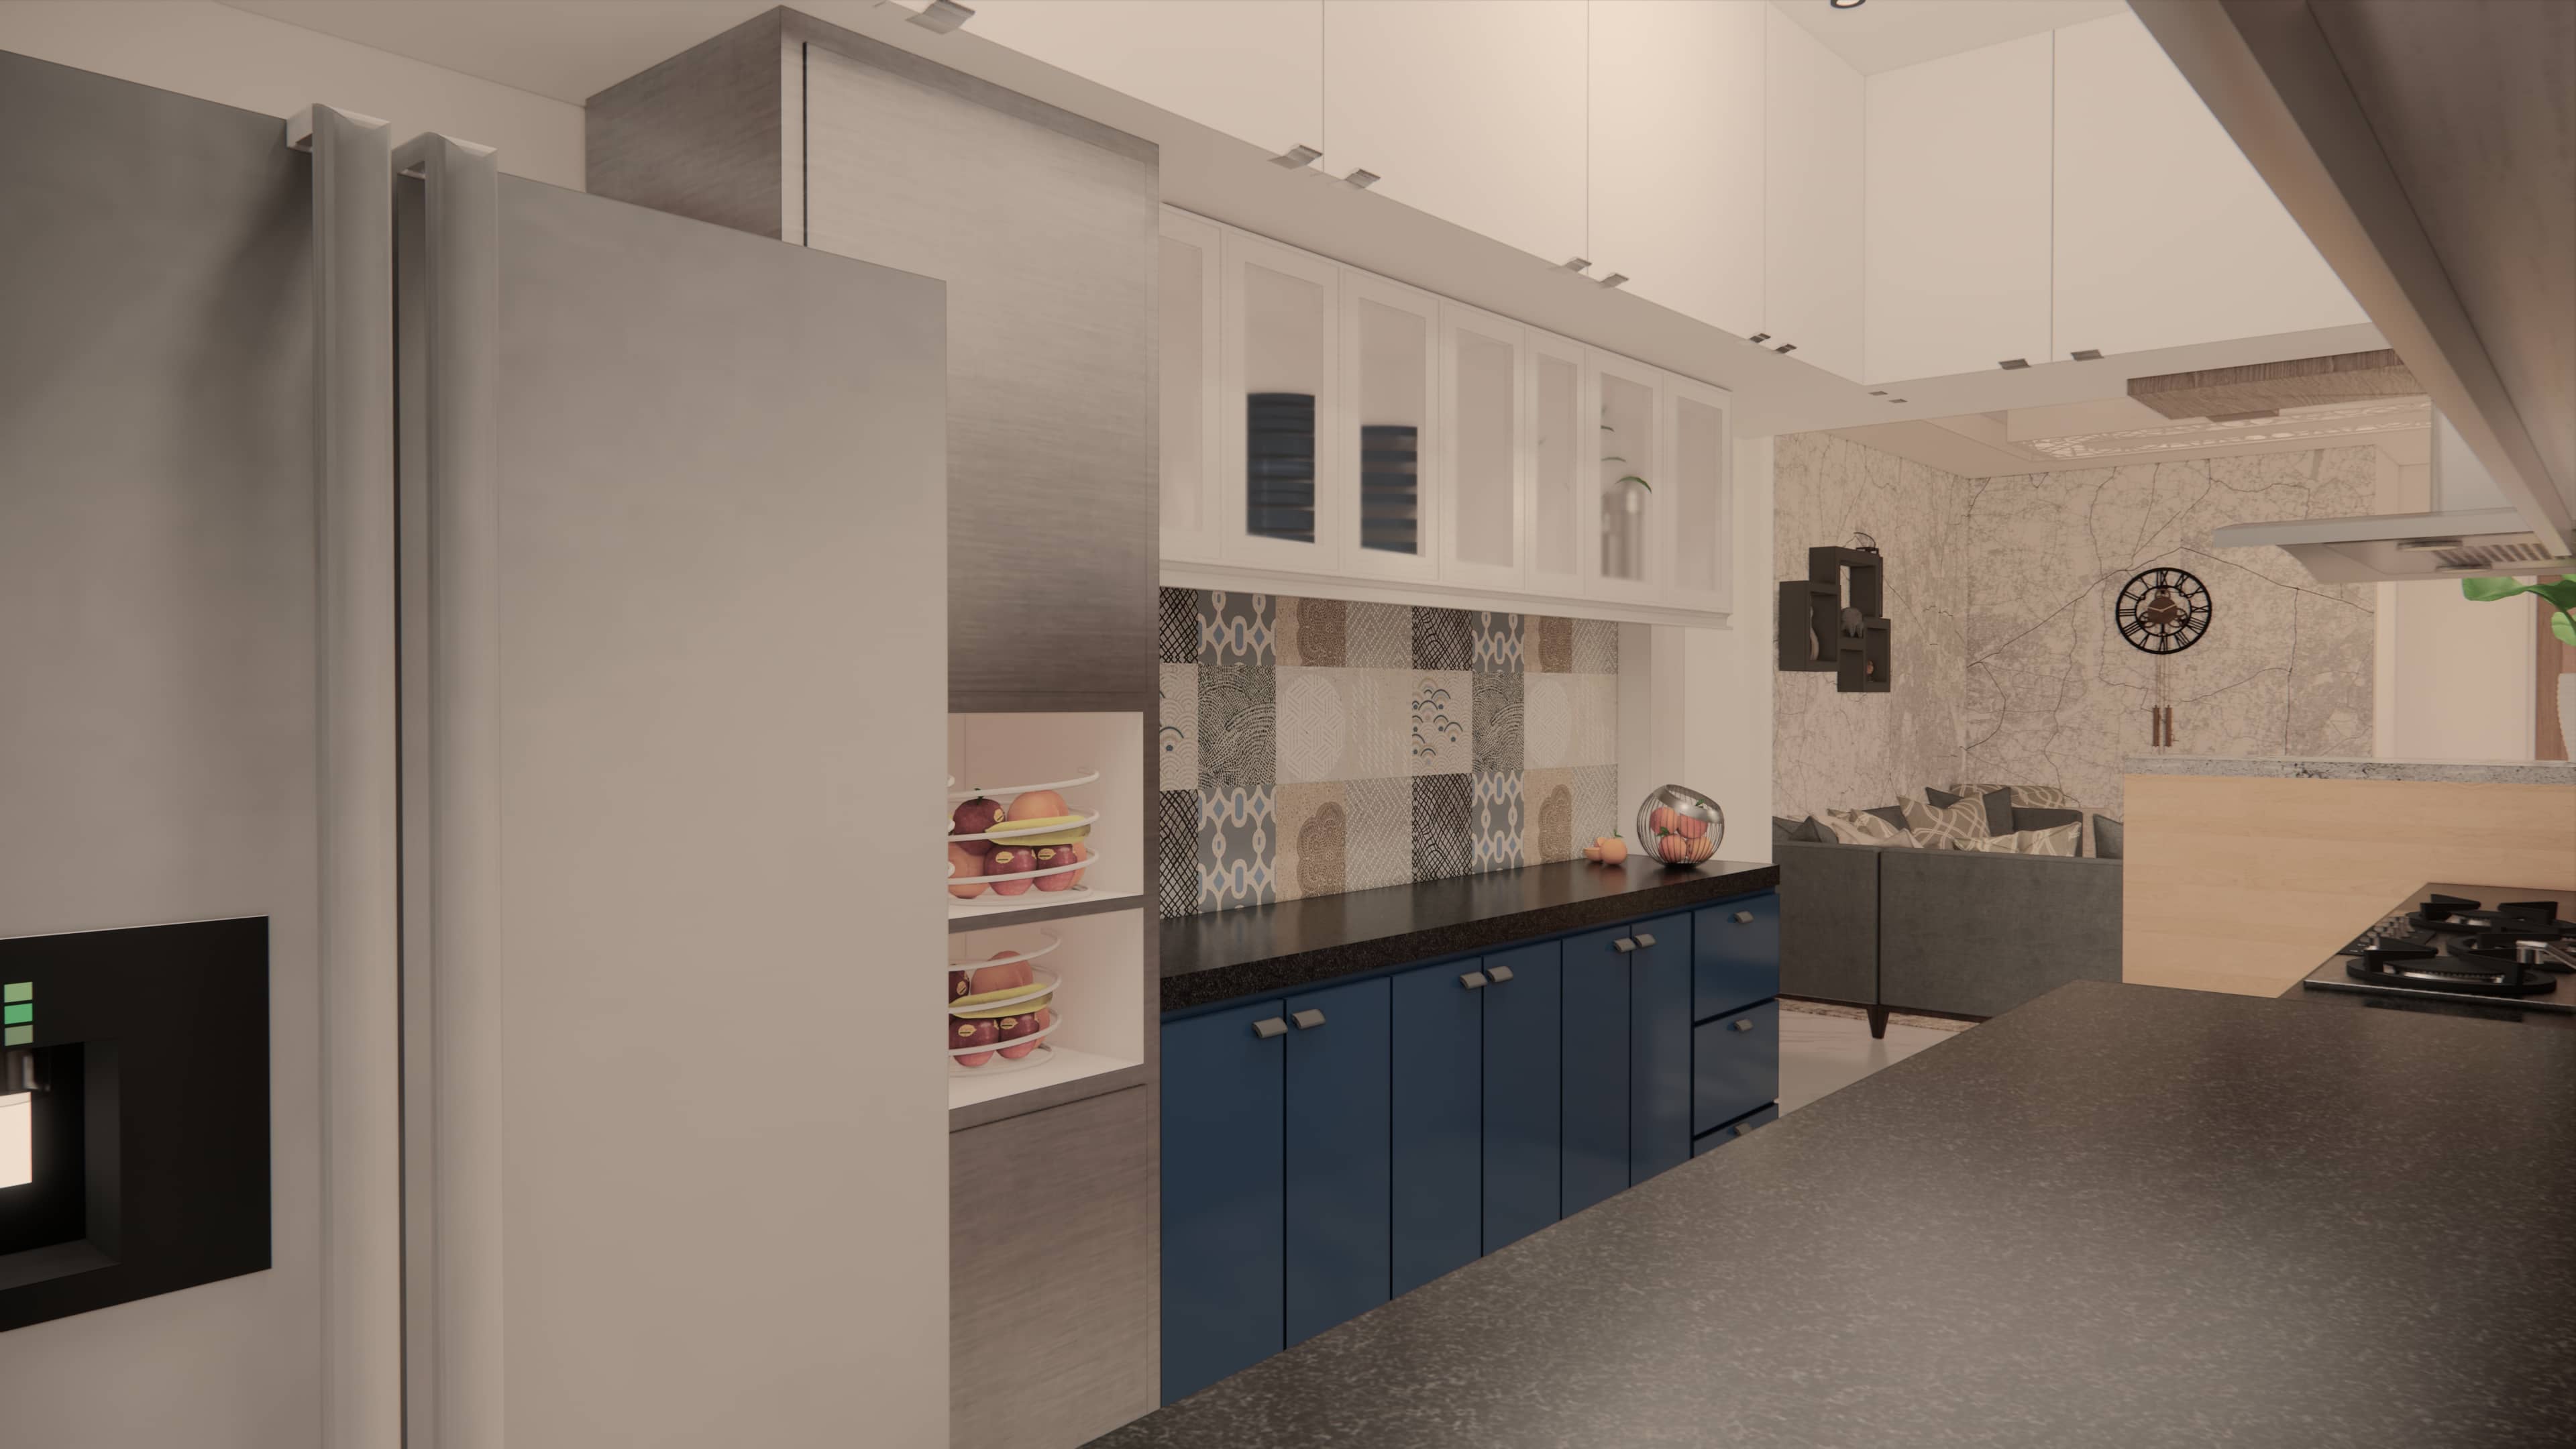 Quality eligant modular kitchen designs